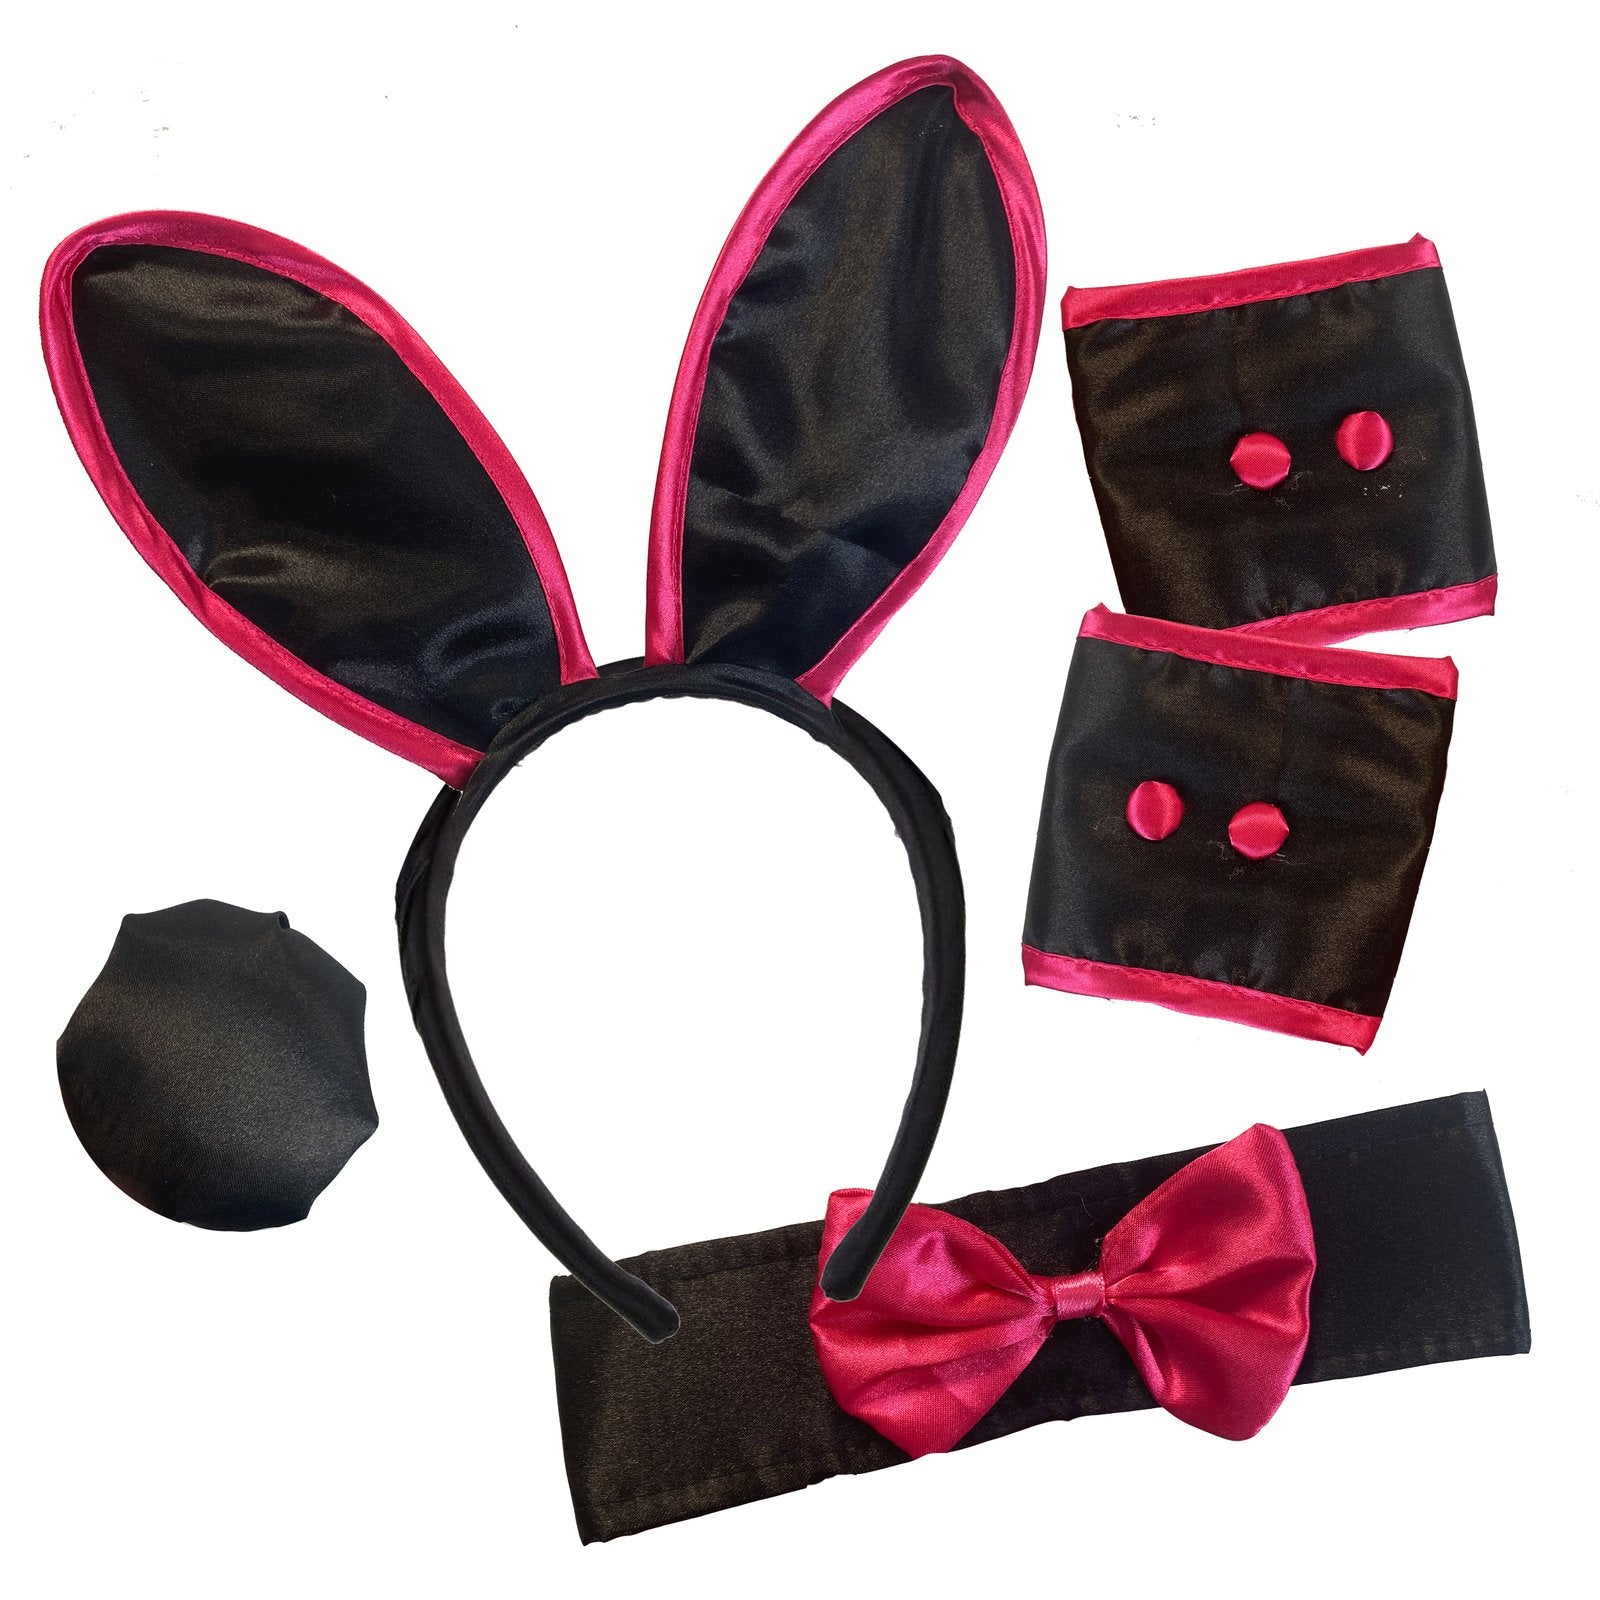 Costume Play Boy Bunny Kit Hot Pink/Black